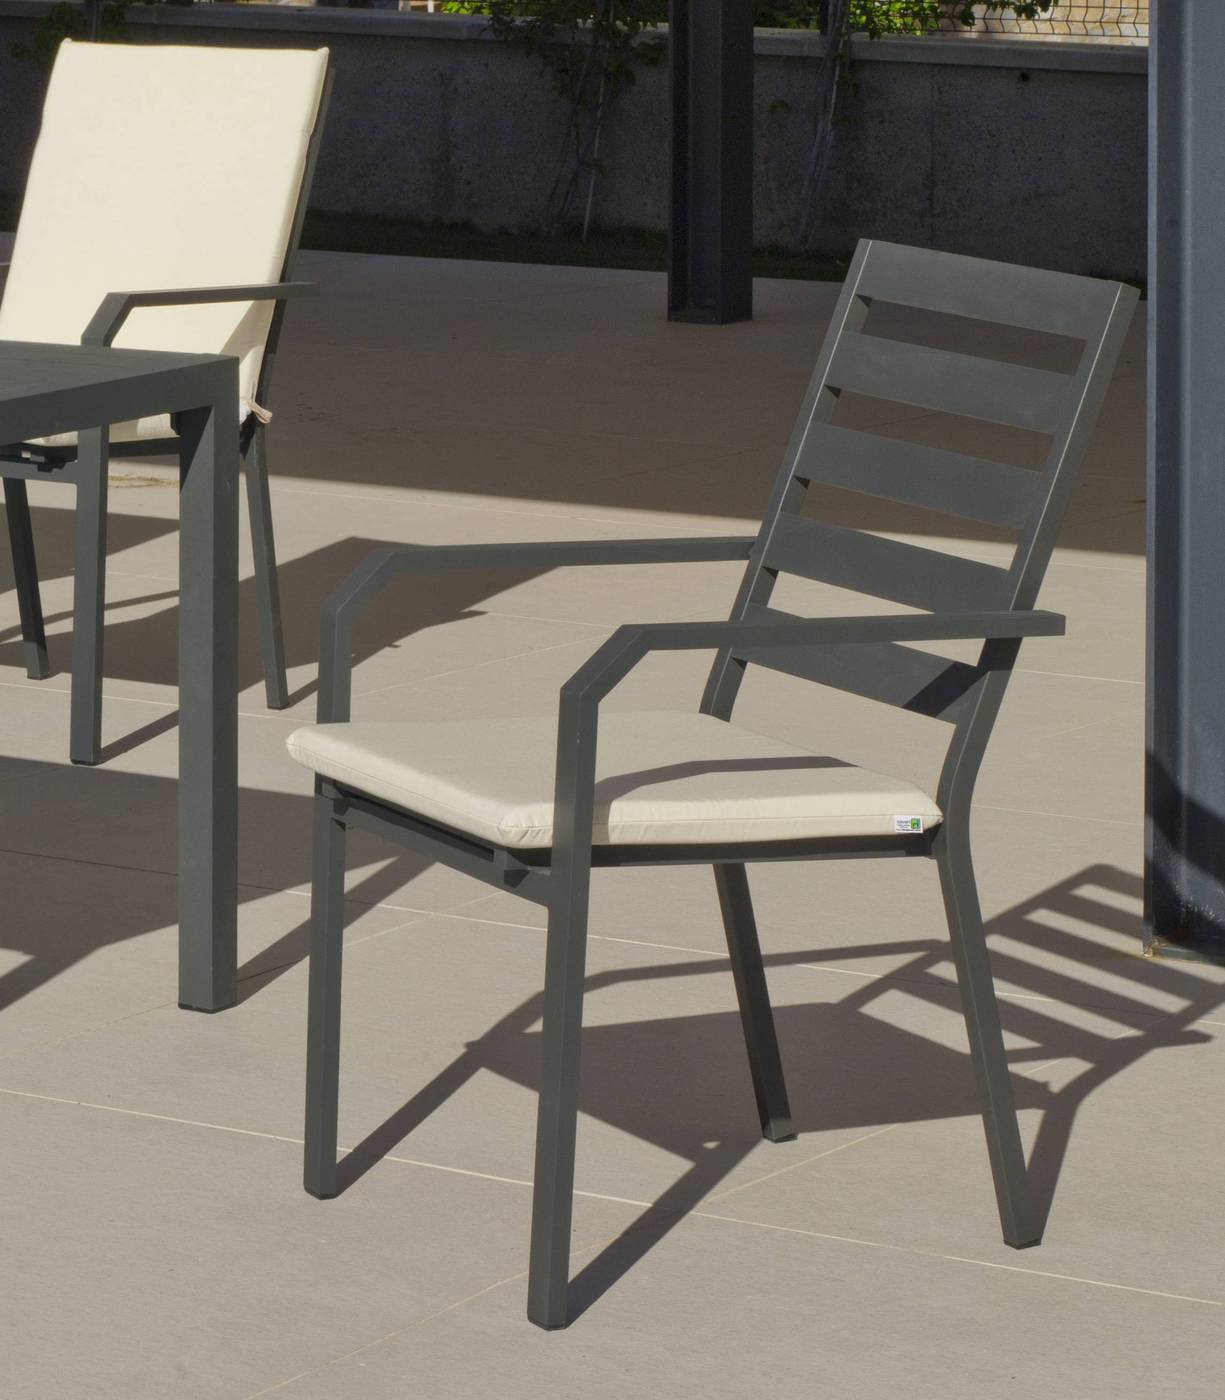 Set Aluminio Palma-Caravel 90-4 - Conjunto aluminio luxe: Mesa cuadrada 90 cm + 4 sillones. Disponible en color blanco, plata, bronce, antracita y champagne.